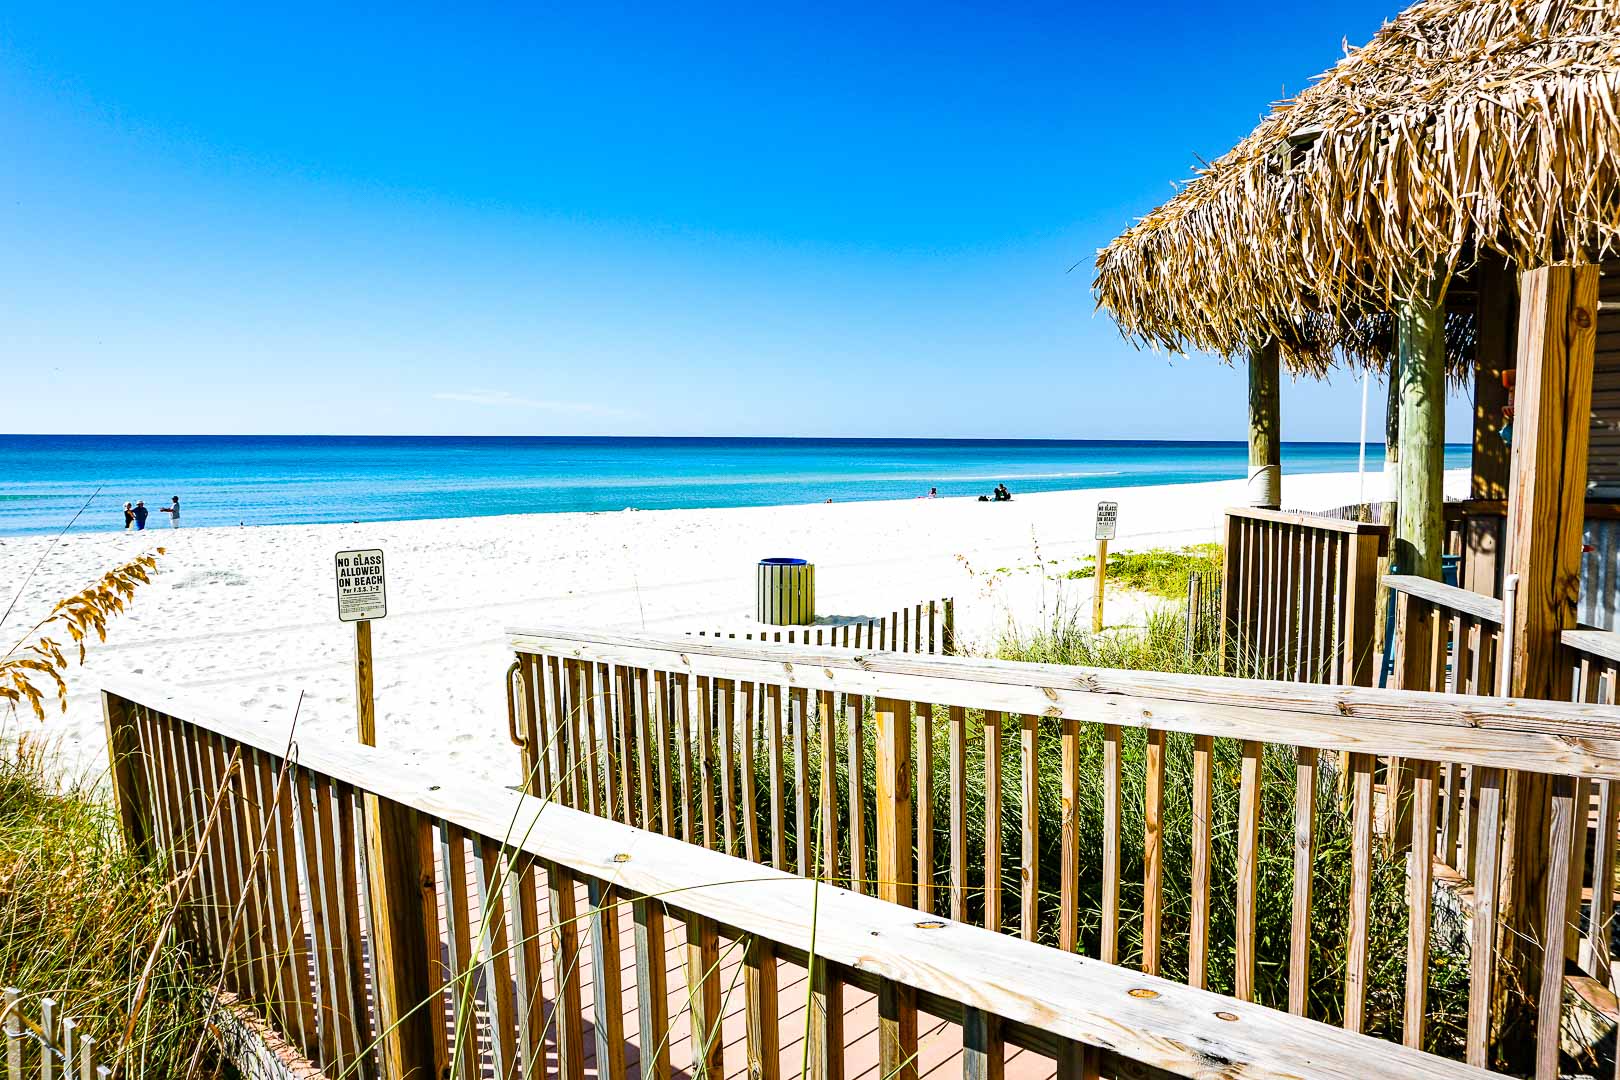 Access to the beach at VRI's Landmark Holiday Beach Resort in Panama City, Florida.